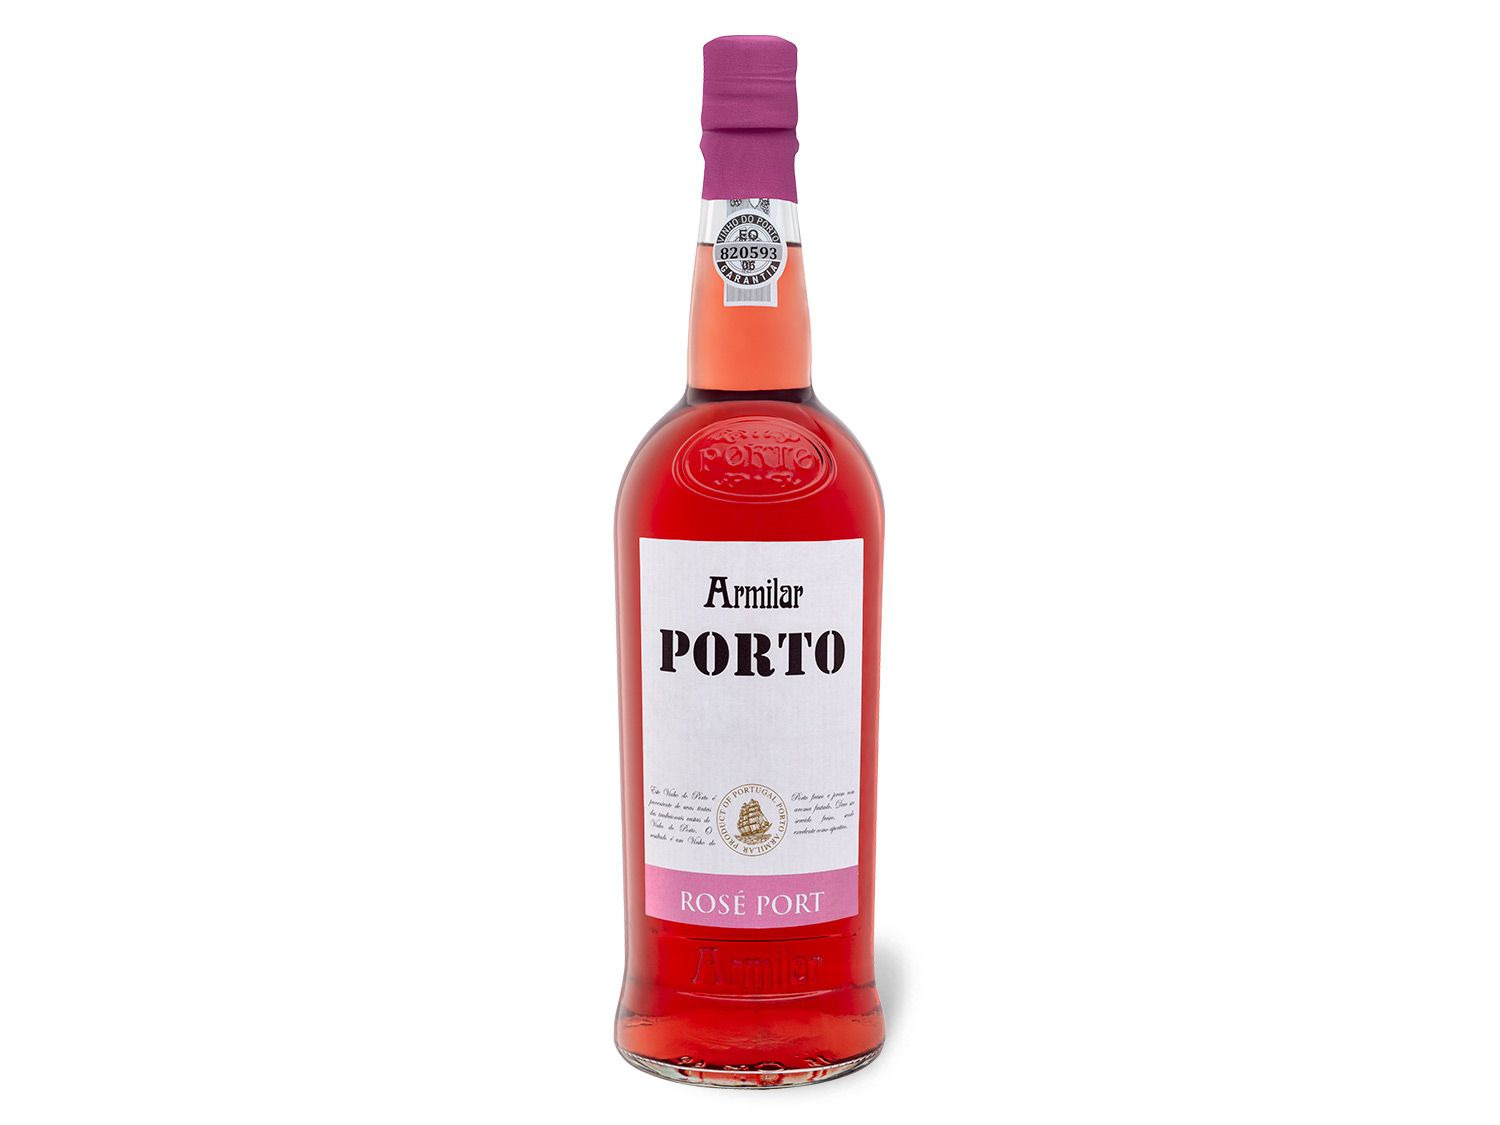 Armilar Porto Rosé 19% Vol online kaufen | LIDL